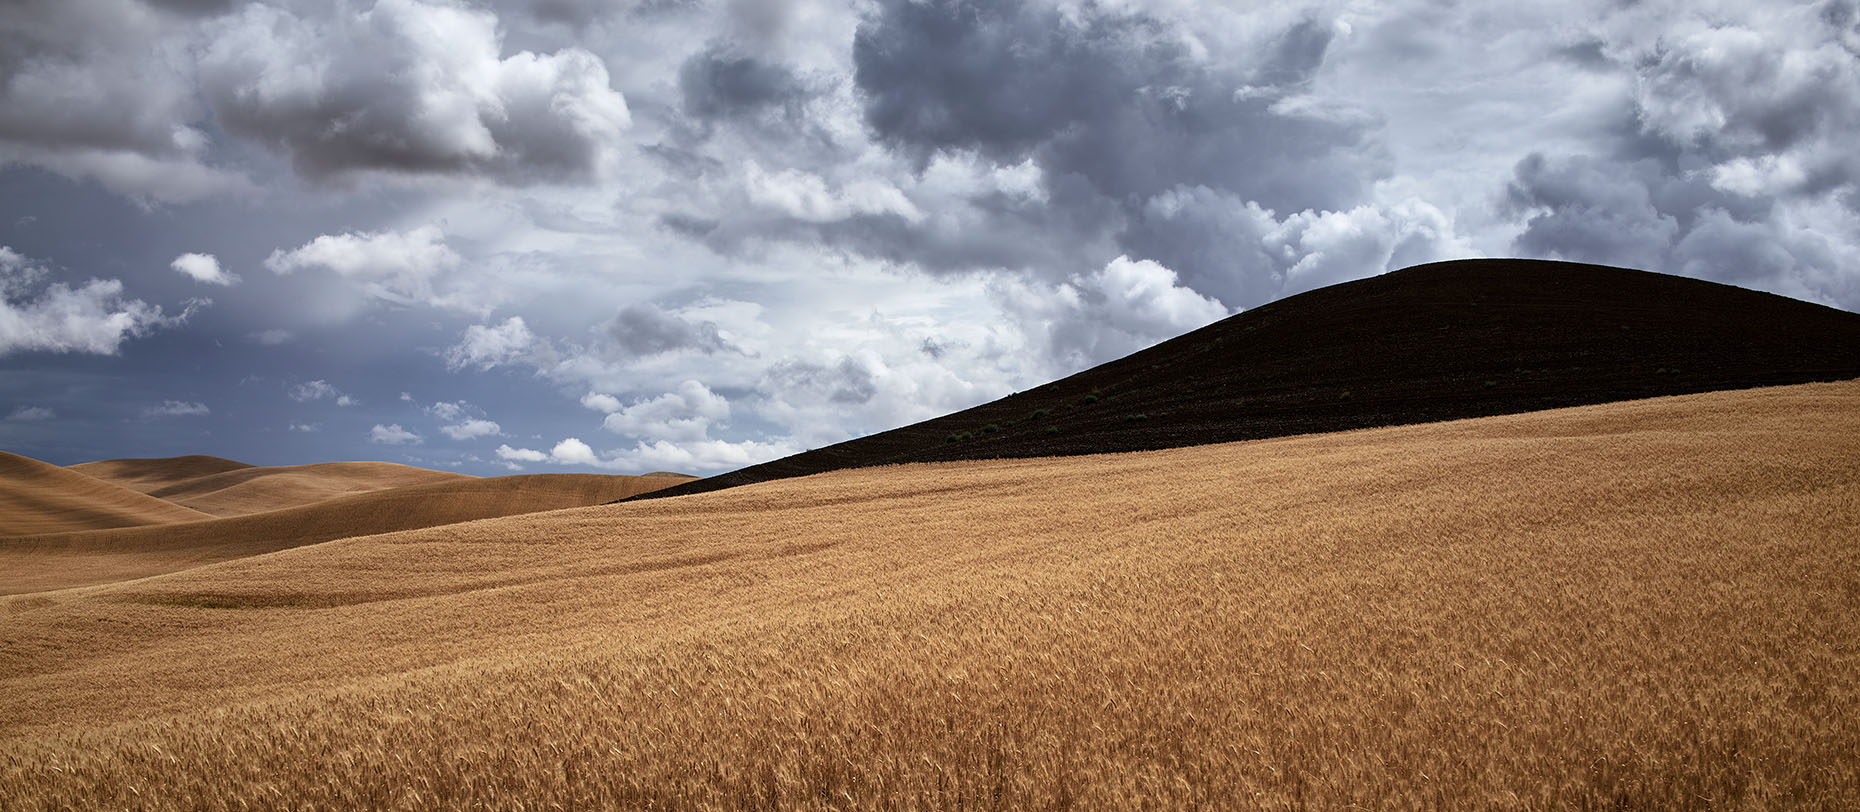 Landscape, Wheat Harvest,  Palouse Valley, Washington State, Cameron Davidson